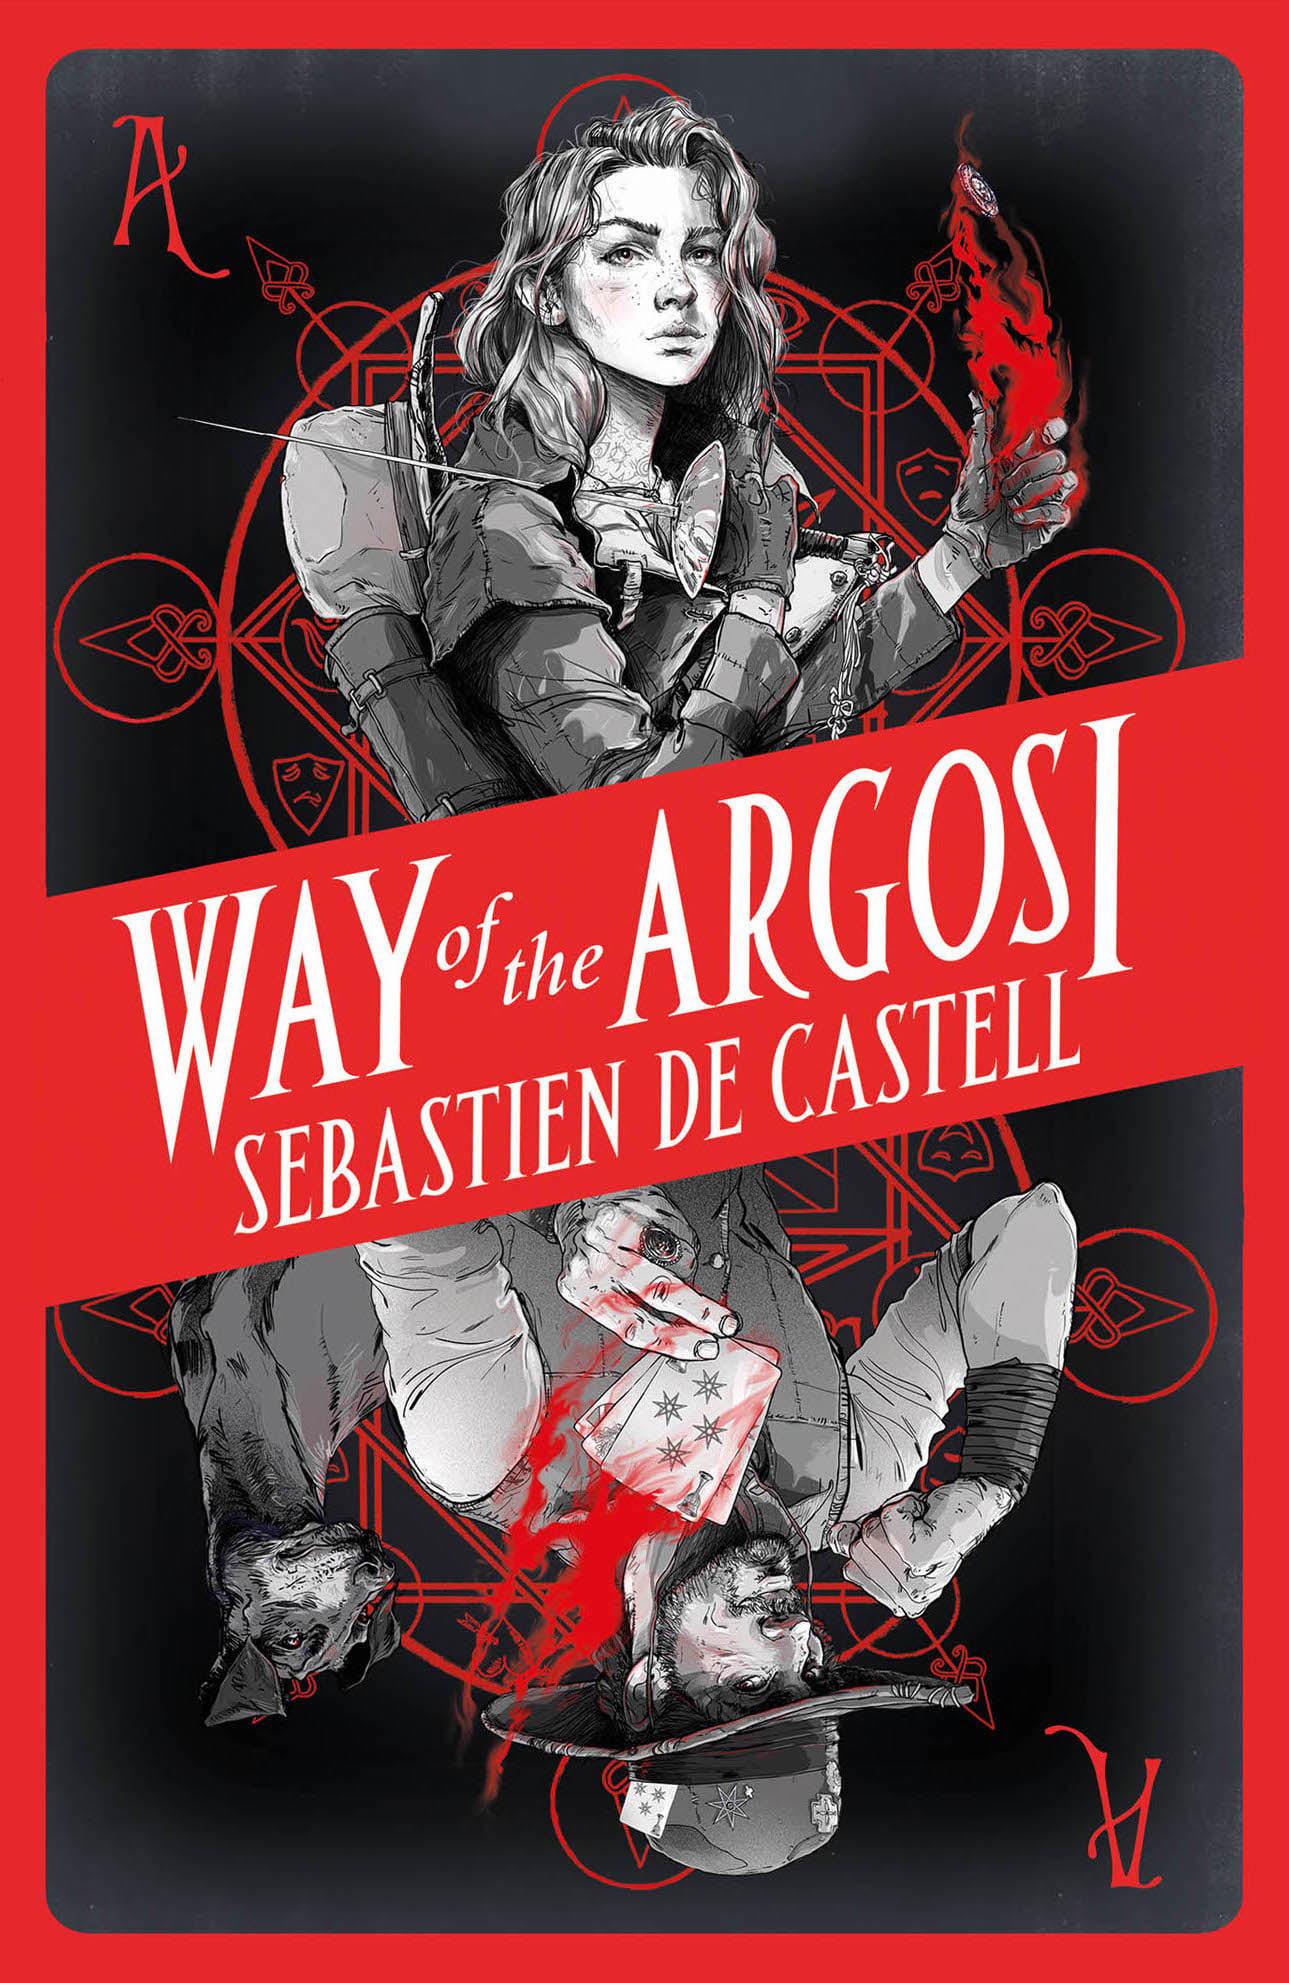 Way of the Argosi by Sebastien de Castell